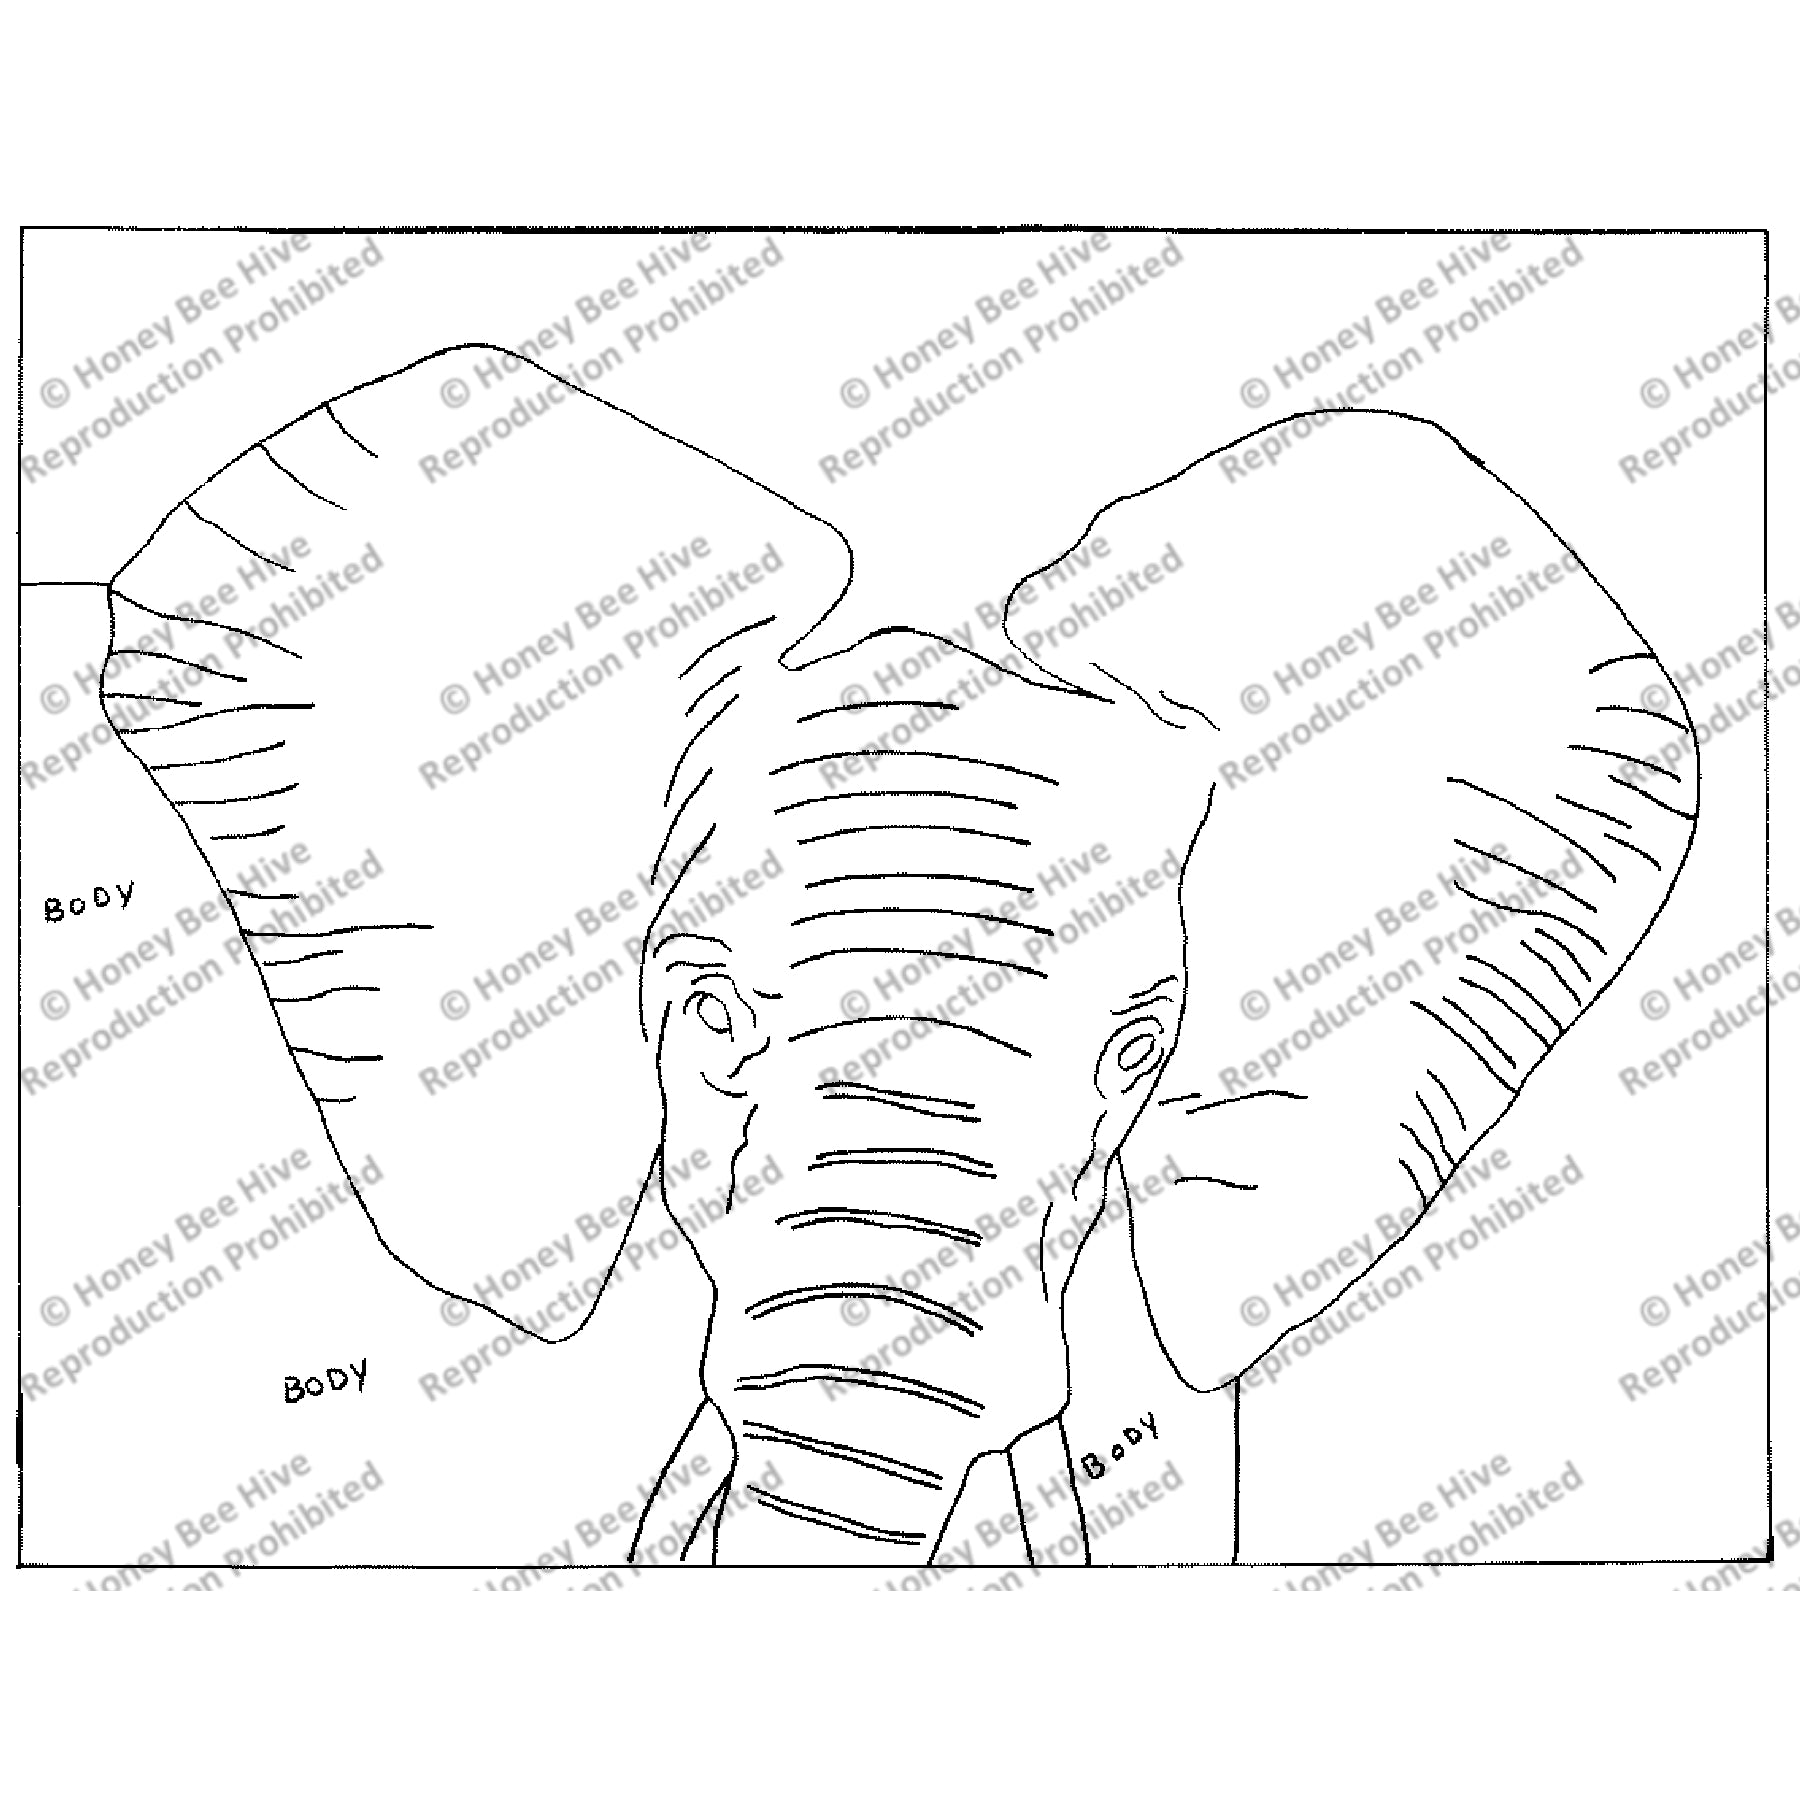 Elephant, rug hooking pattern